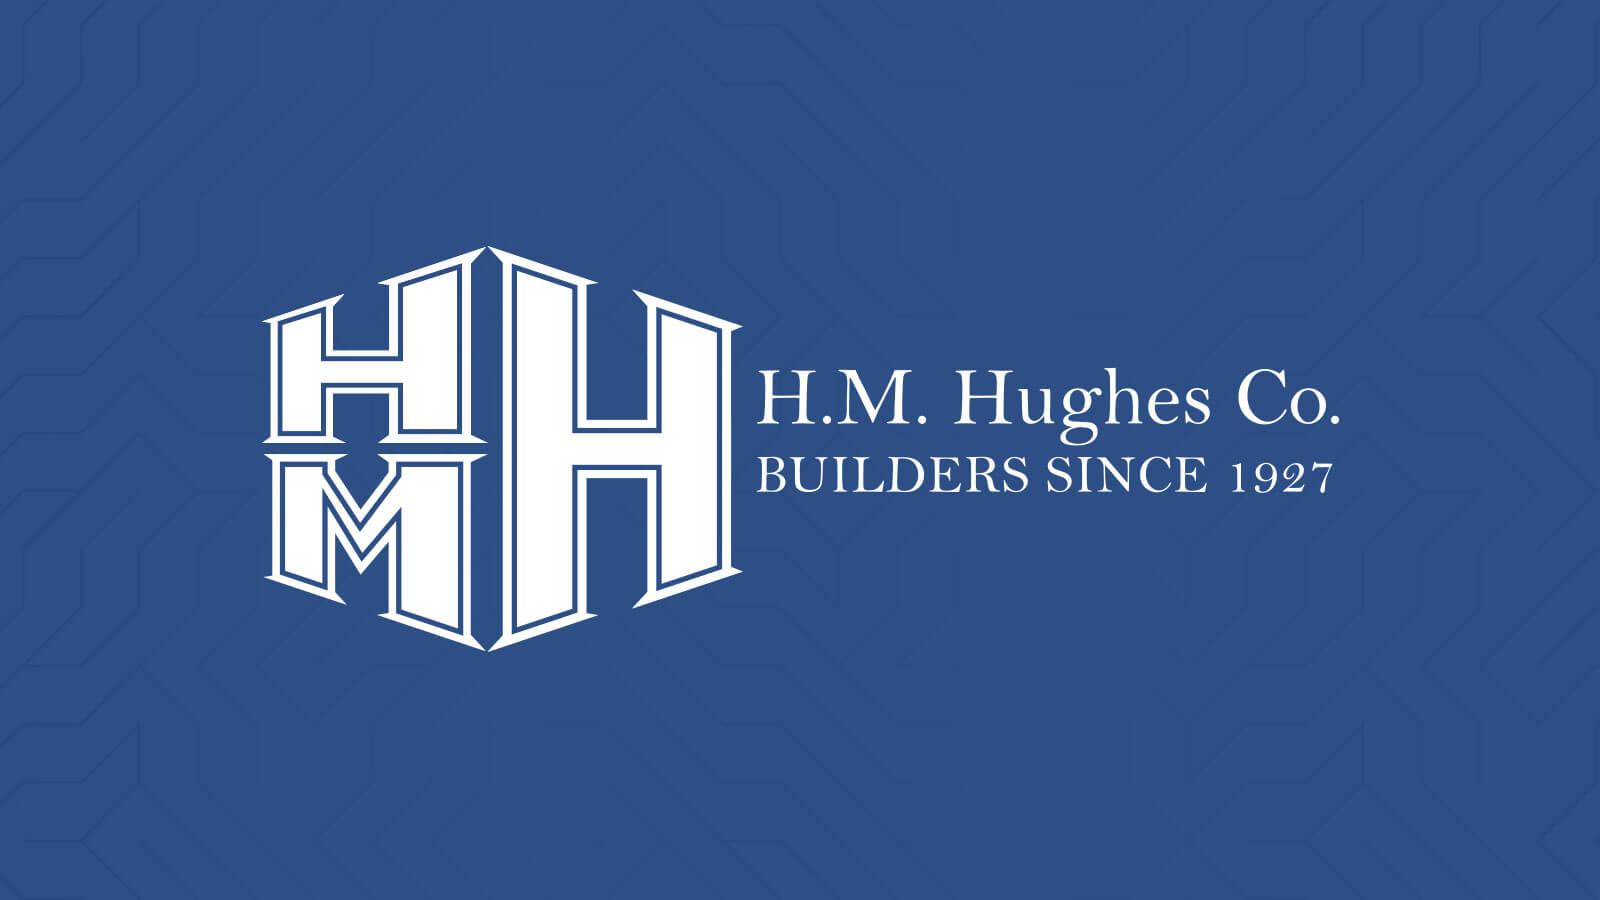 Hughes Logo - H.M. Hughes. Builders Since 1927